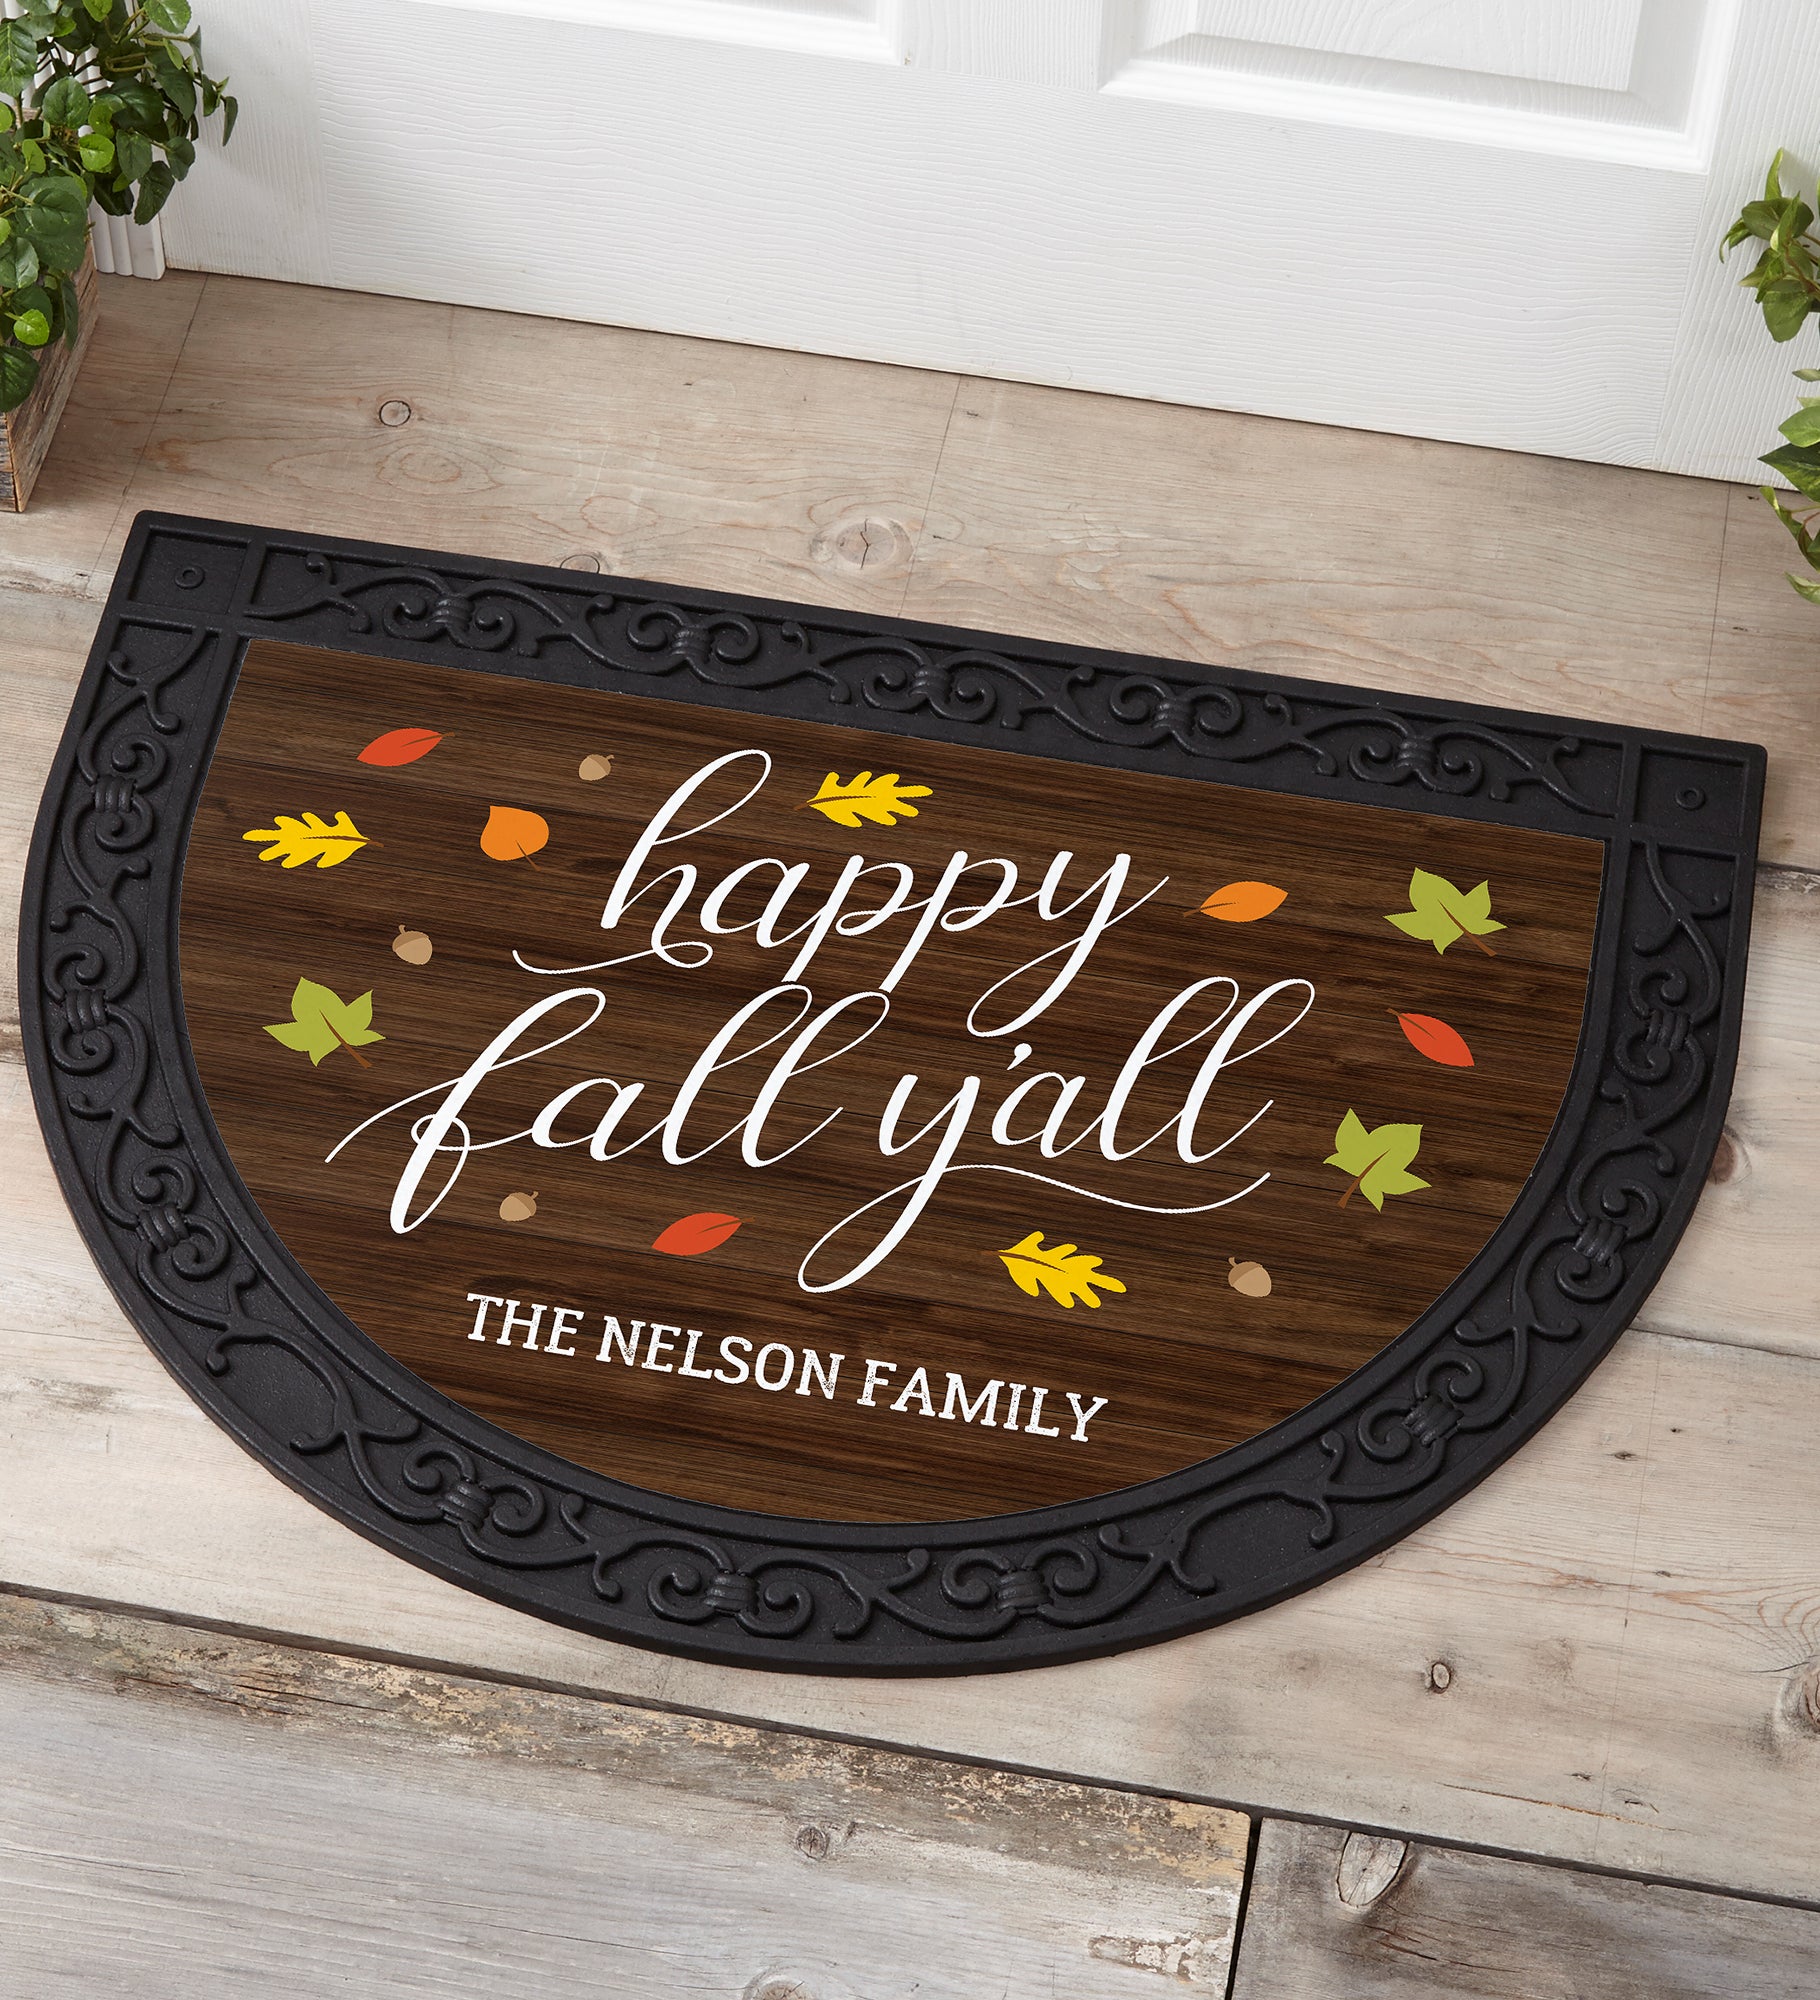 Happy Fall Y'All Personalized Half Round Doormat